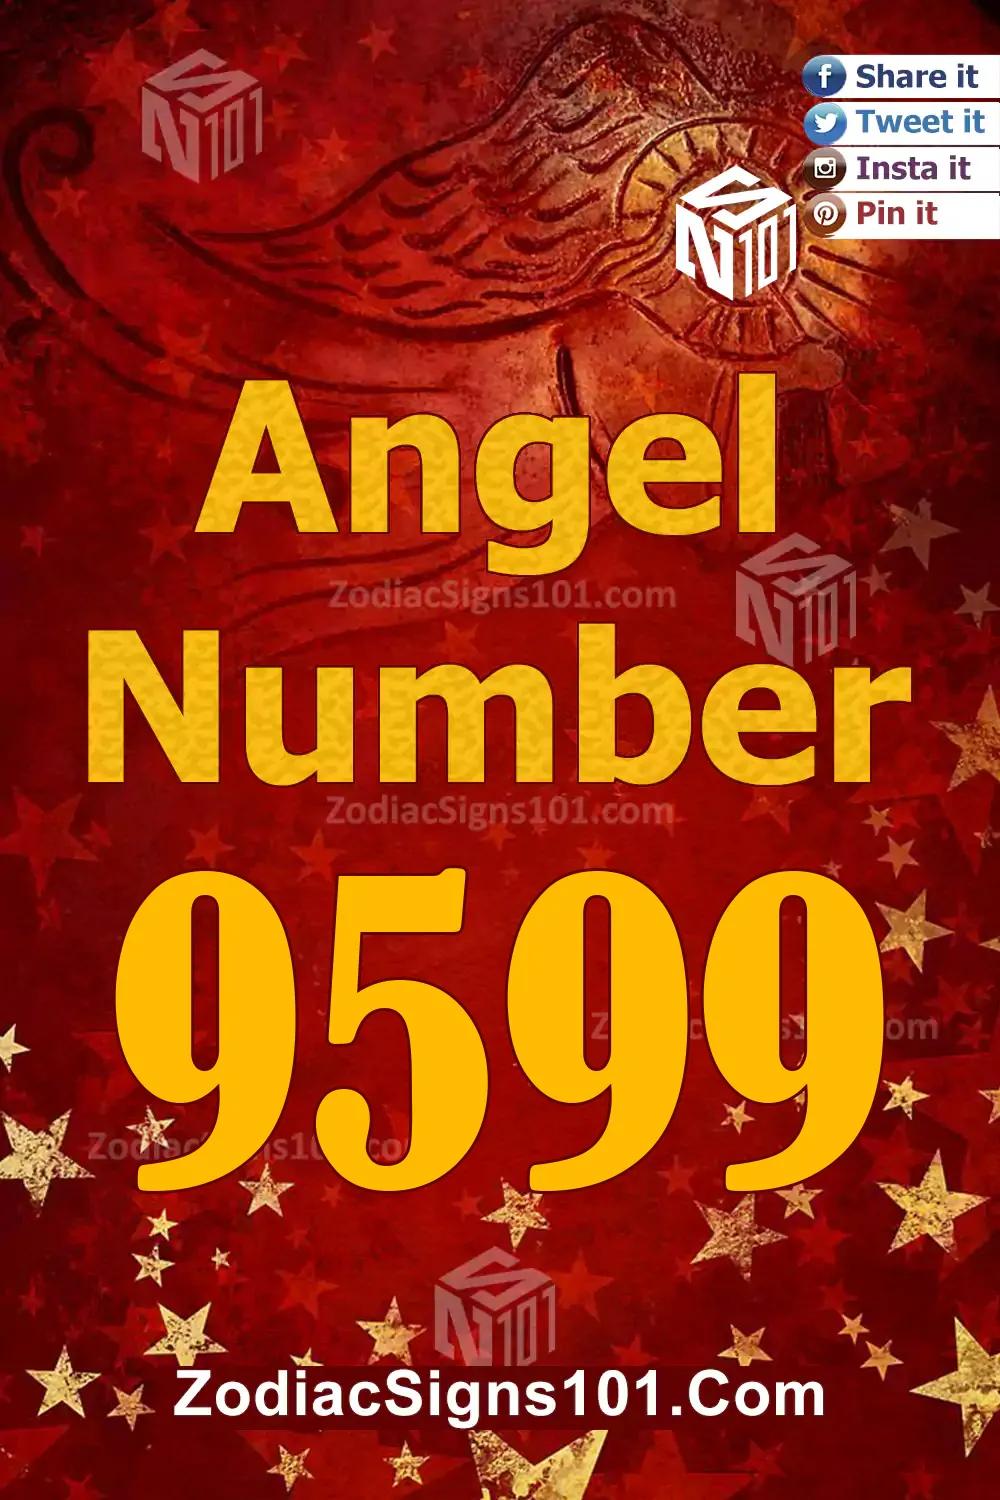 9599-Angel-Number-Meaning.jpg